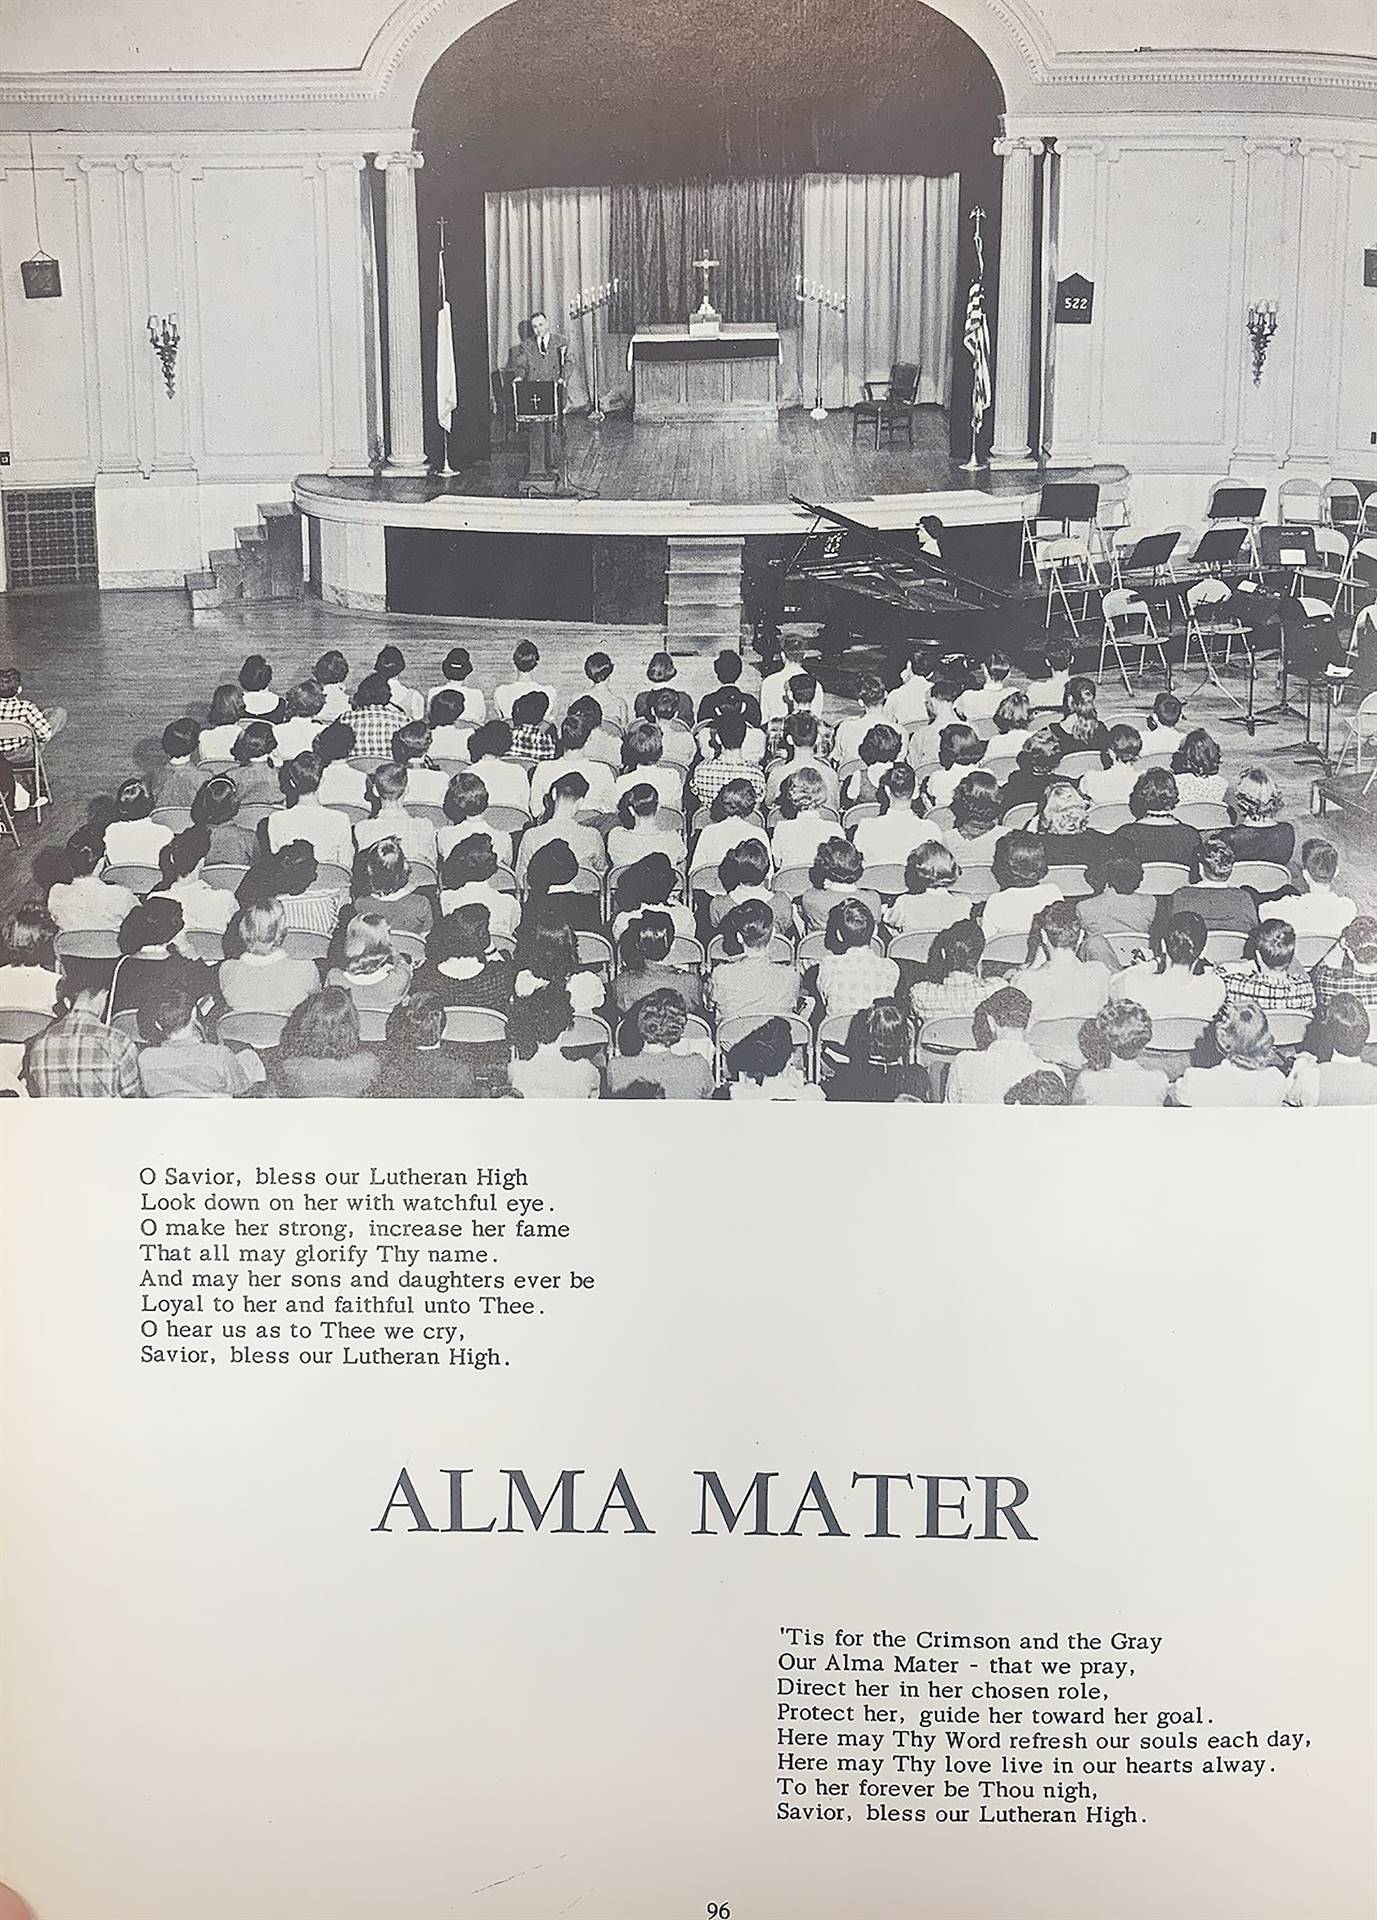 Chapel and Alma Mater